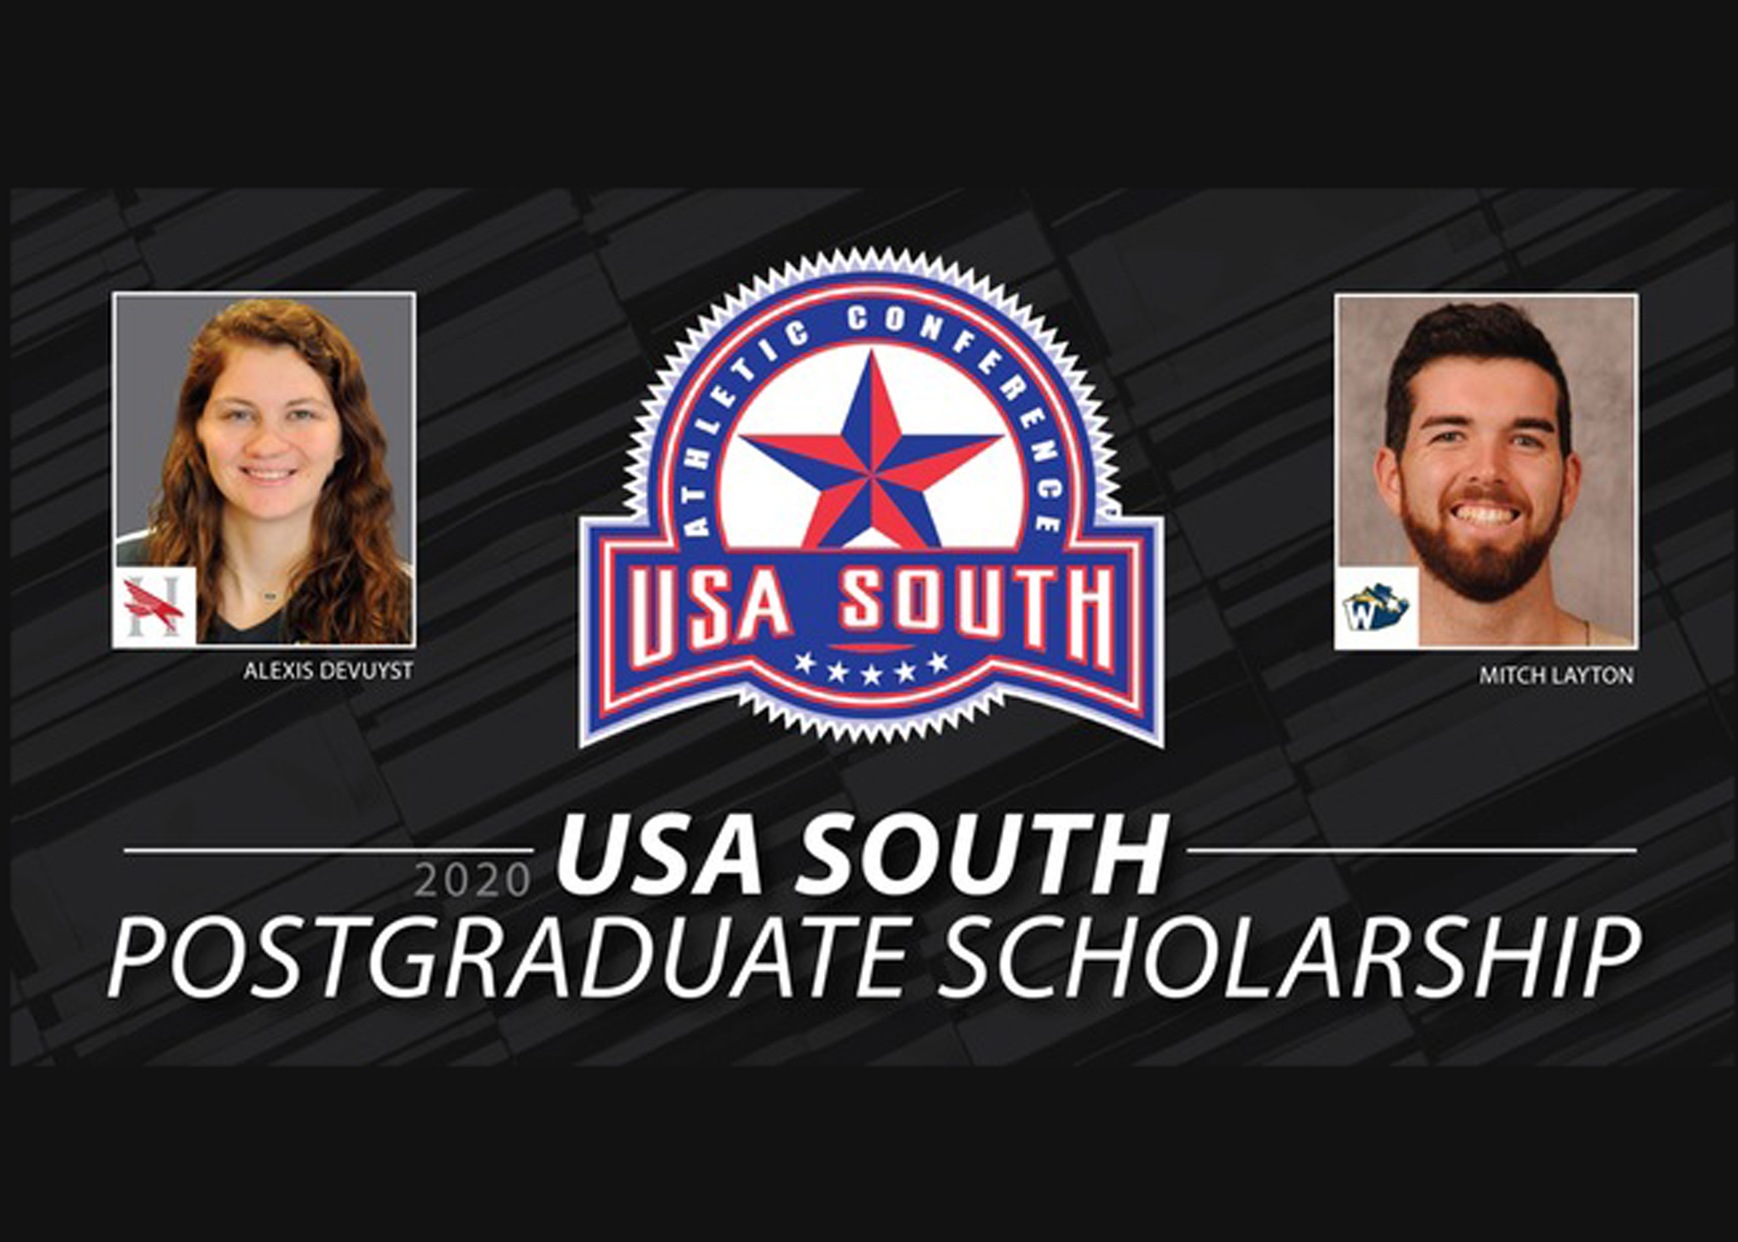 USA South Awards 2020 Postgraduate Scholarships